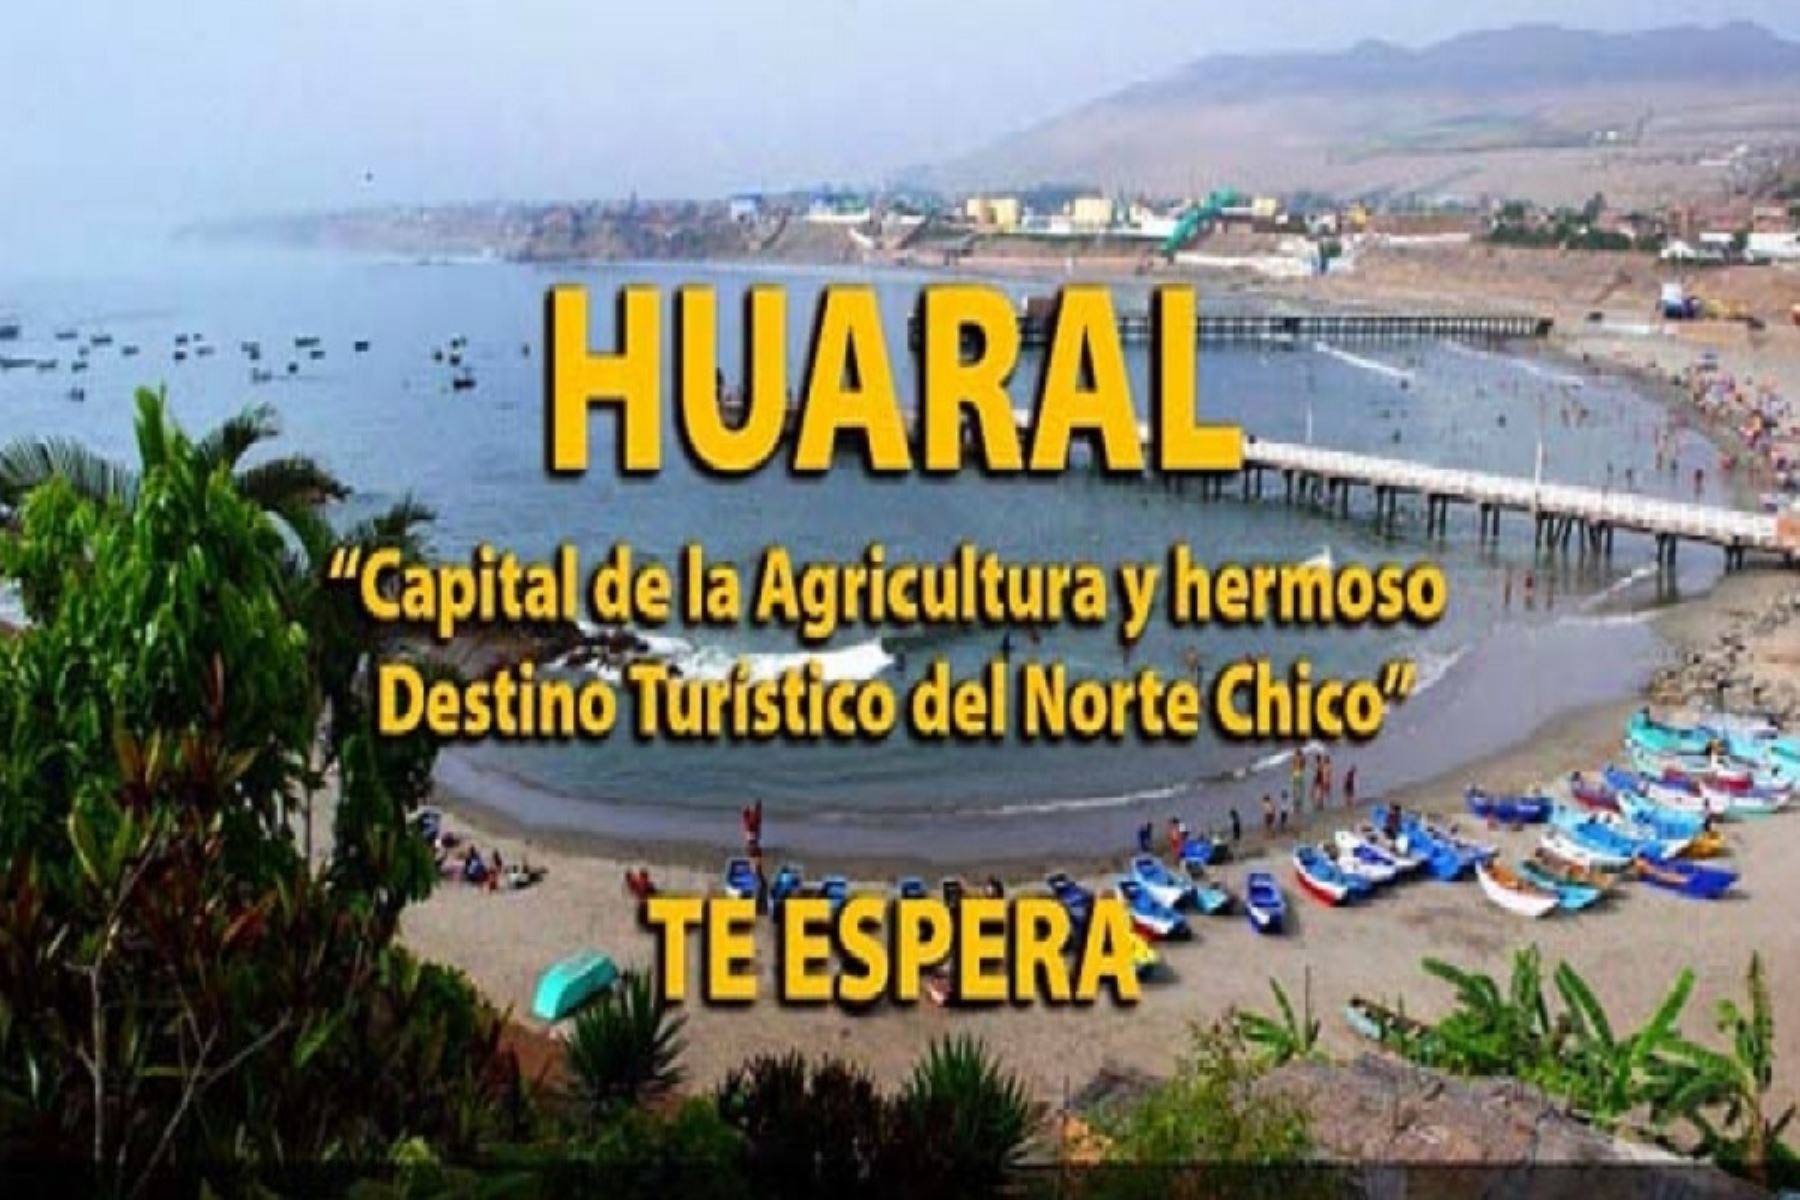 Huaral ofrece diversos atractivos para visitarla en Semana Santa.